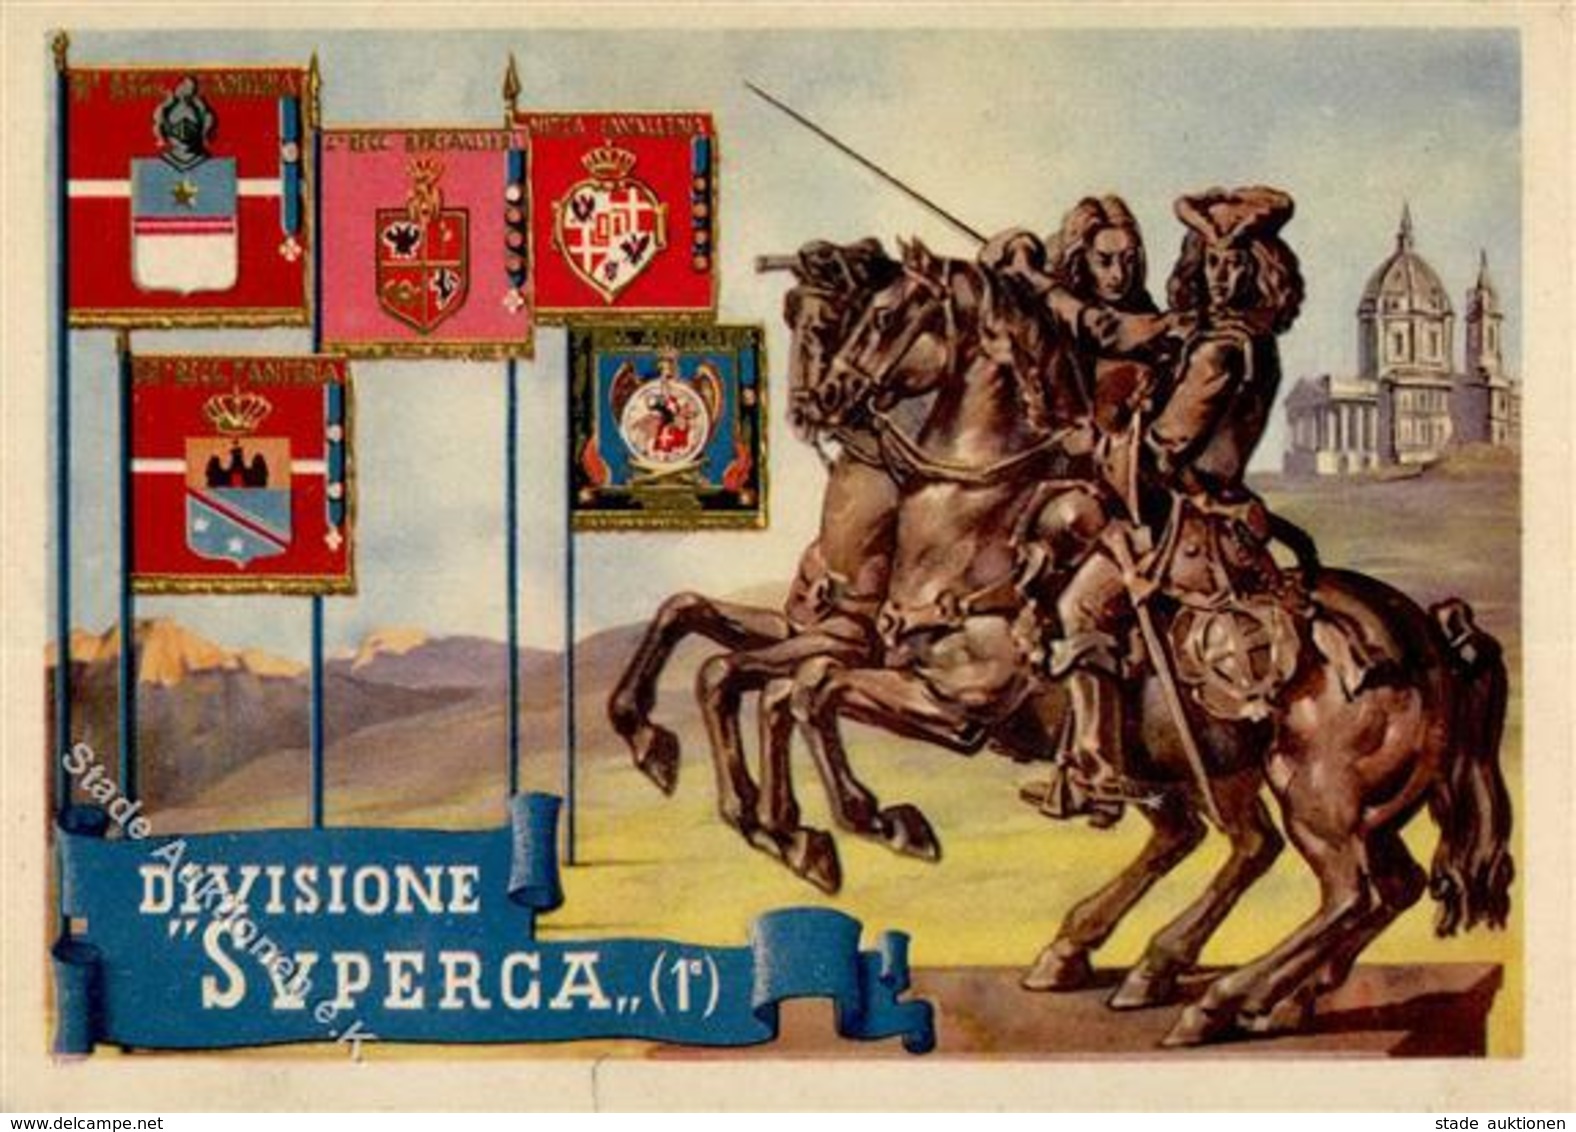 Propaganda WK II Italien Künstlerkarte I-II - Weltkrieg 1939-45